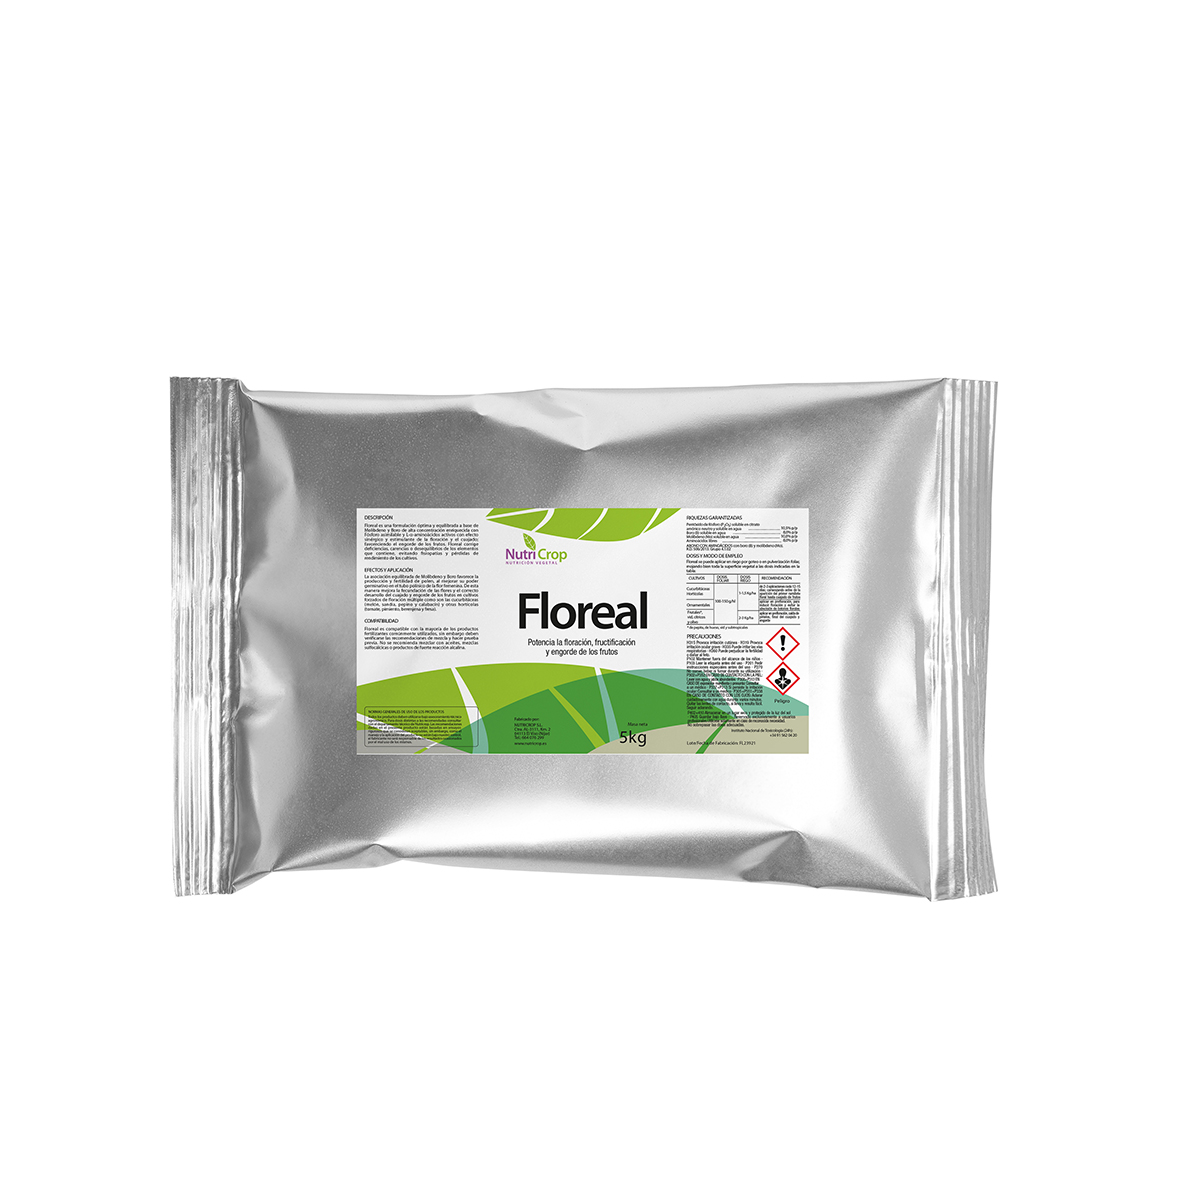 Floreal - Nutricrop